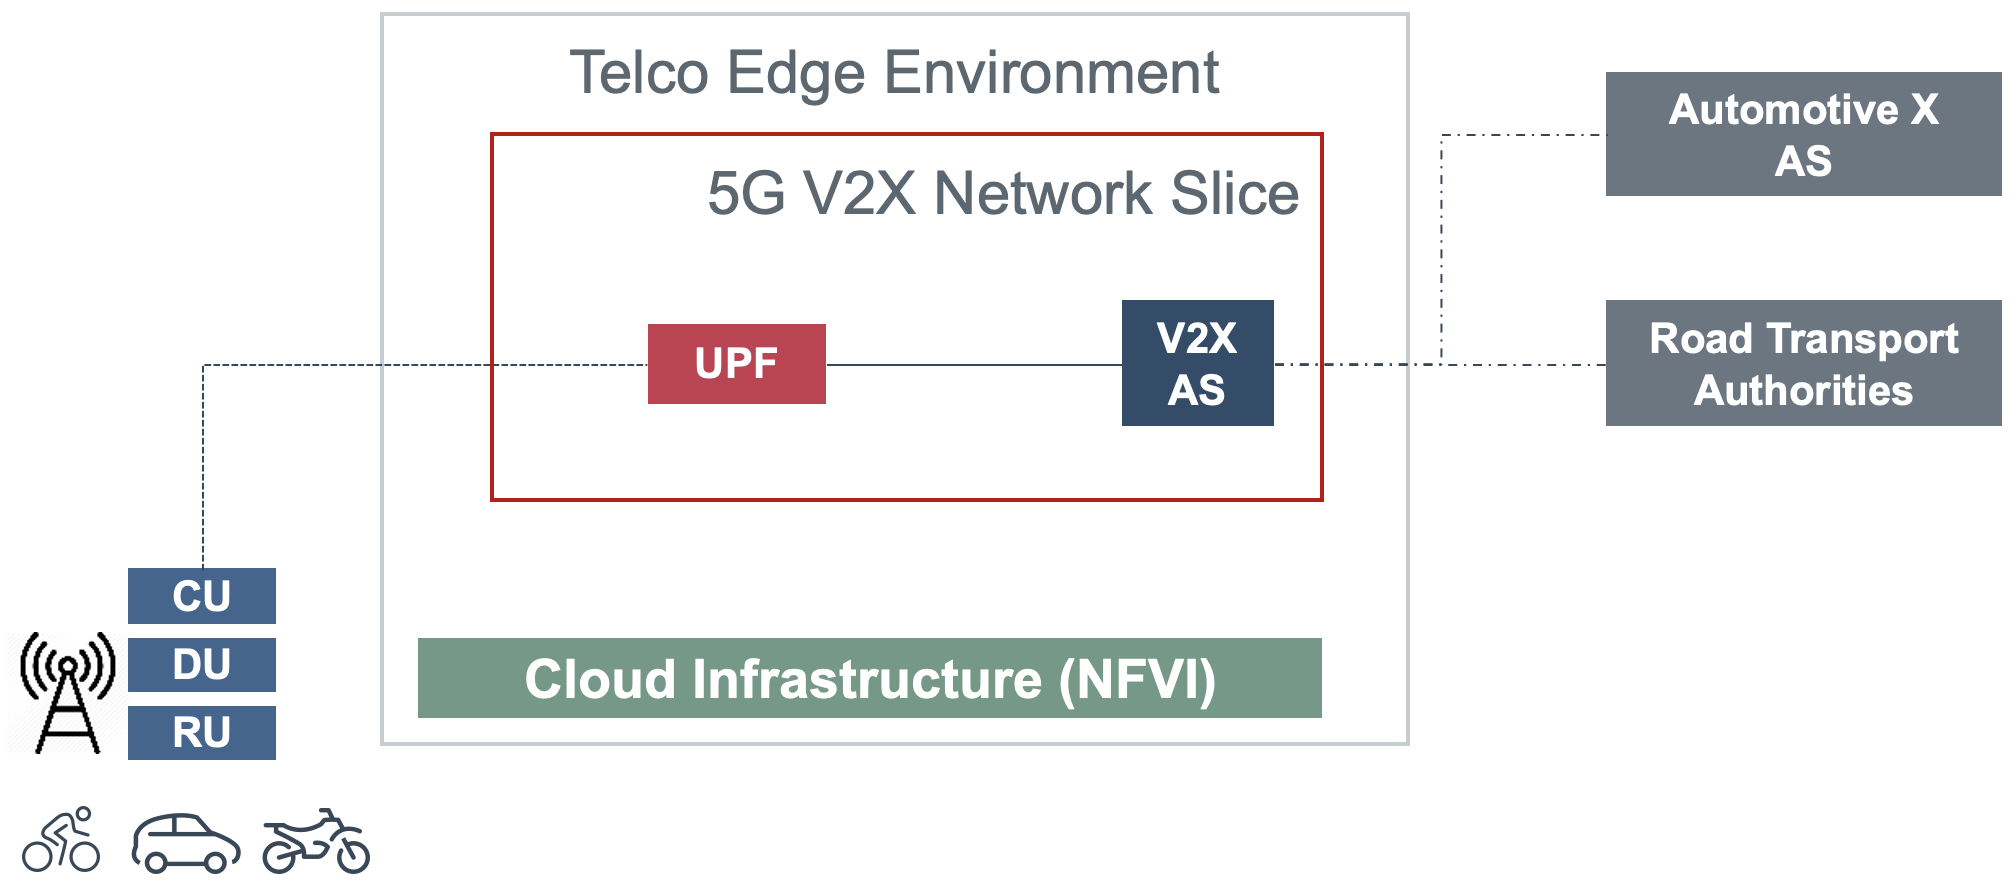 "Figure 2-3: Edge Automotive (V2X) with uRLLC Core Network Slicing"